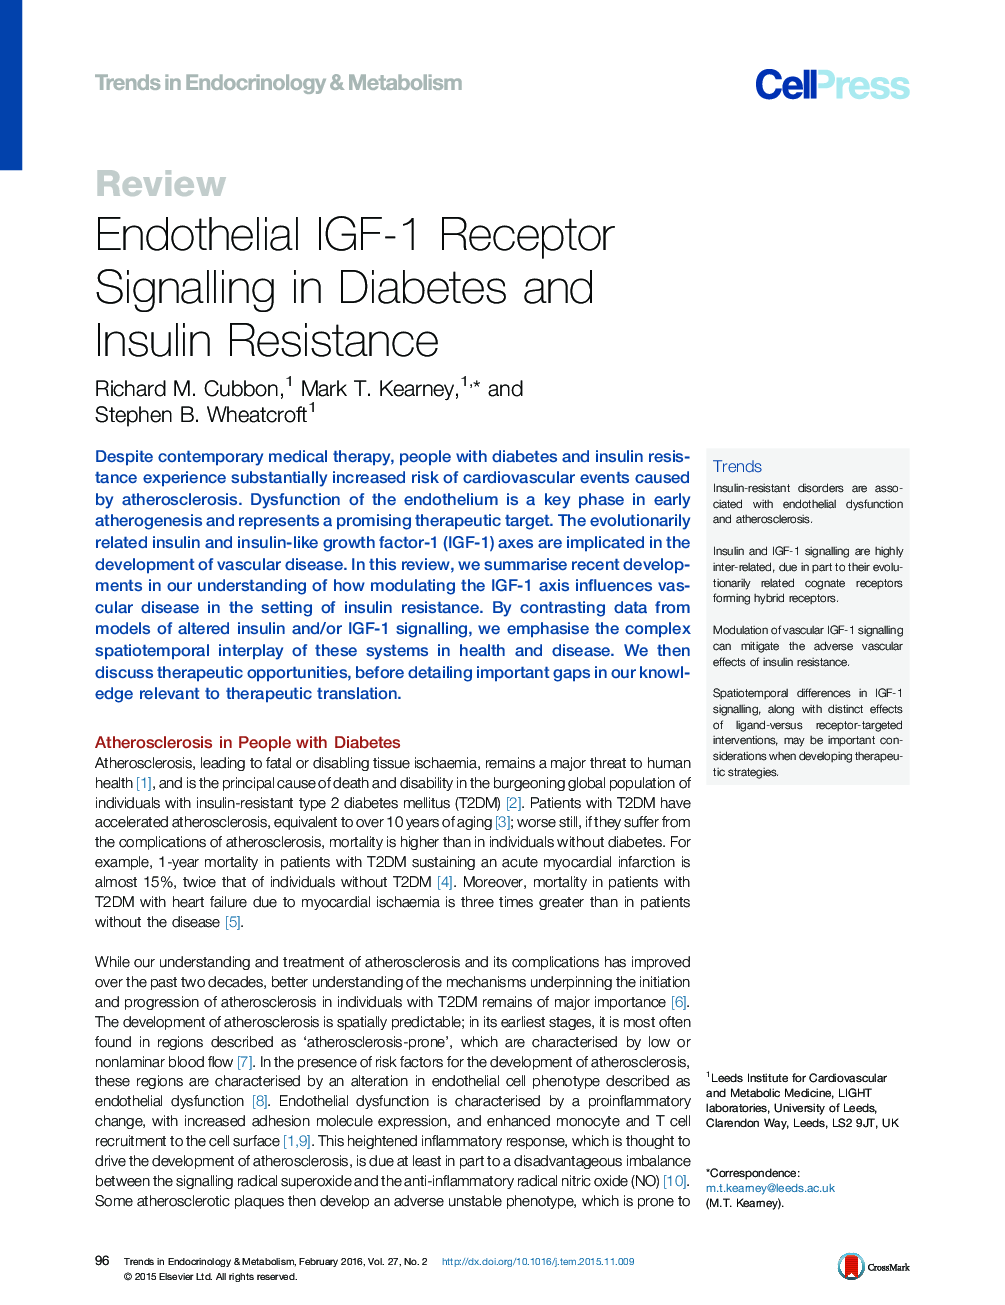 Endothelial IGF-1 Receptor Signalling in Diabetes and Insulin Resistance